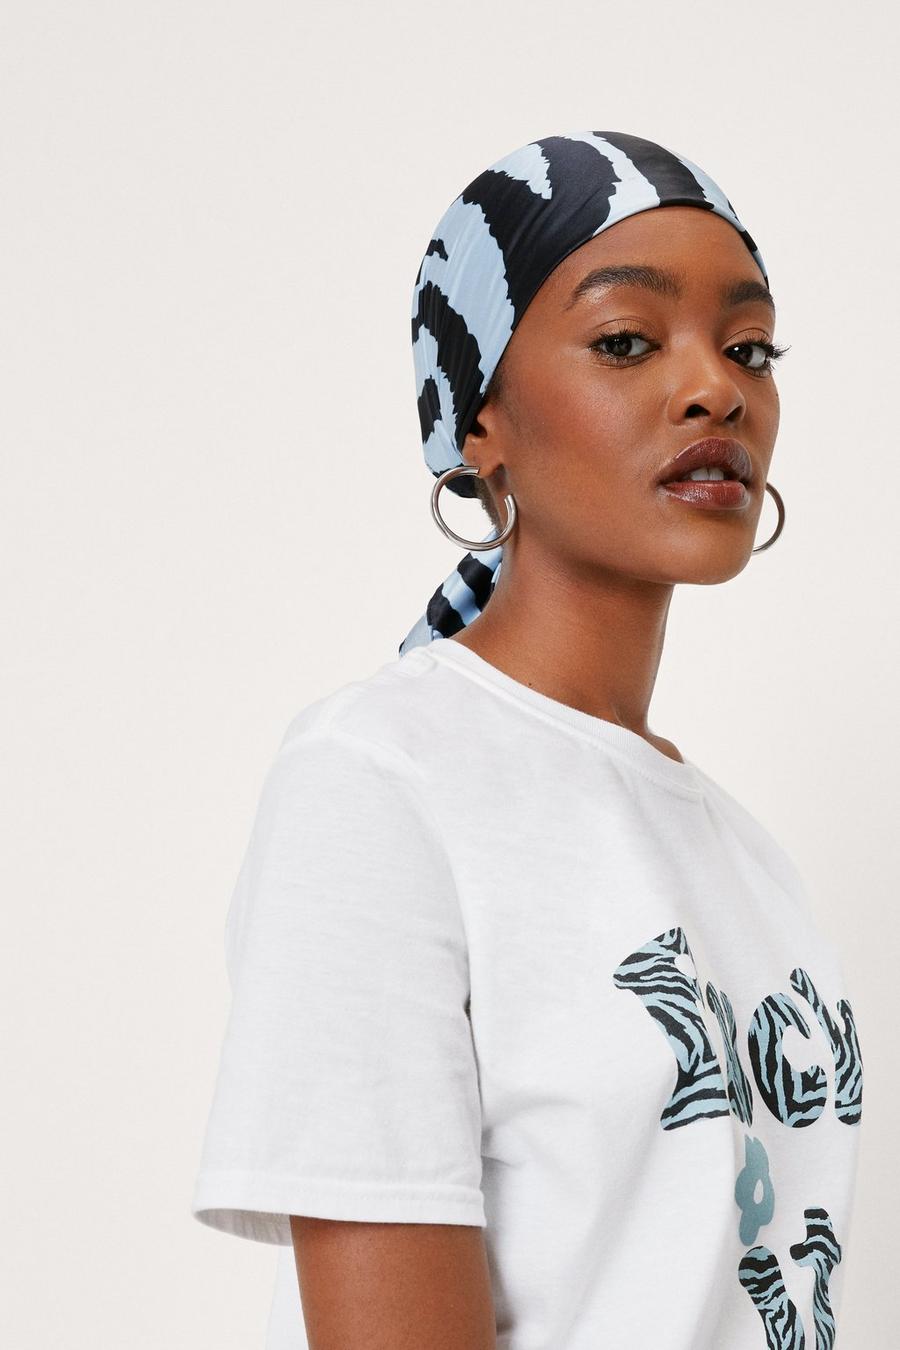 FVCK CANCER Zebra Print Headscarf